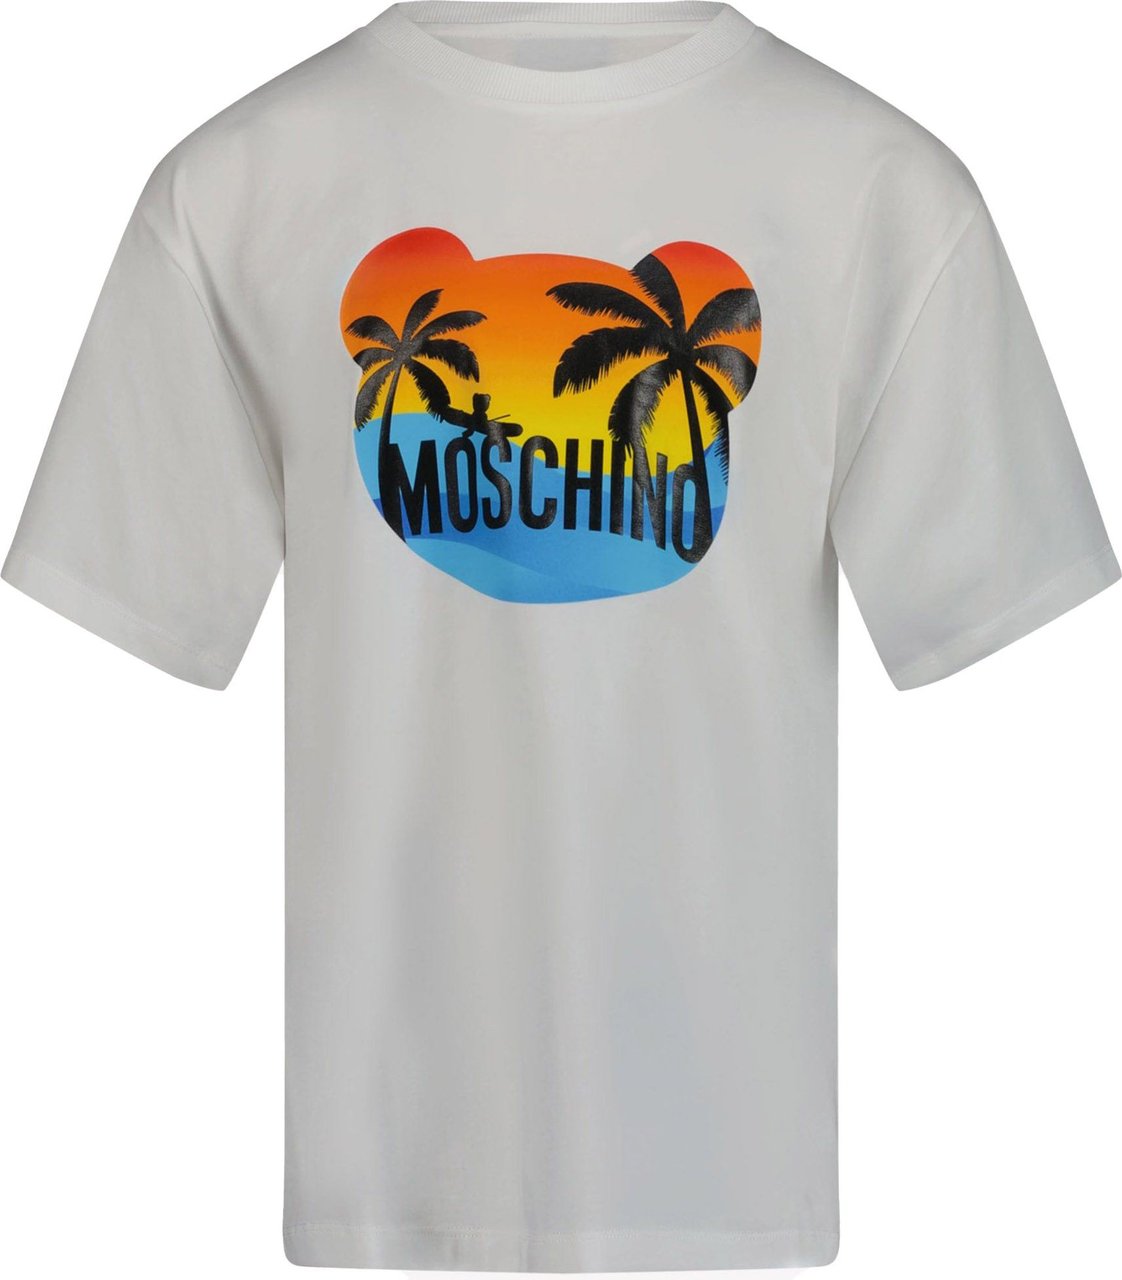 Moschino Moschino Kinder Unisex T-shirt Wit Wit